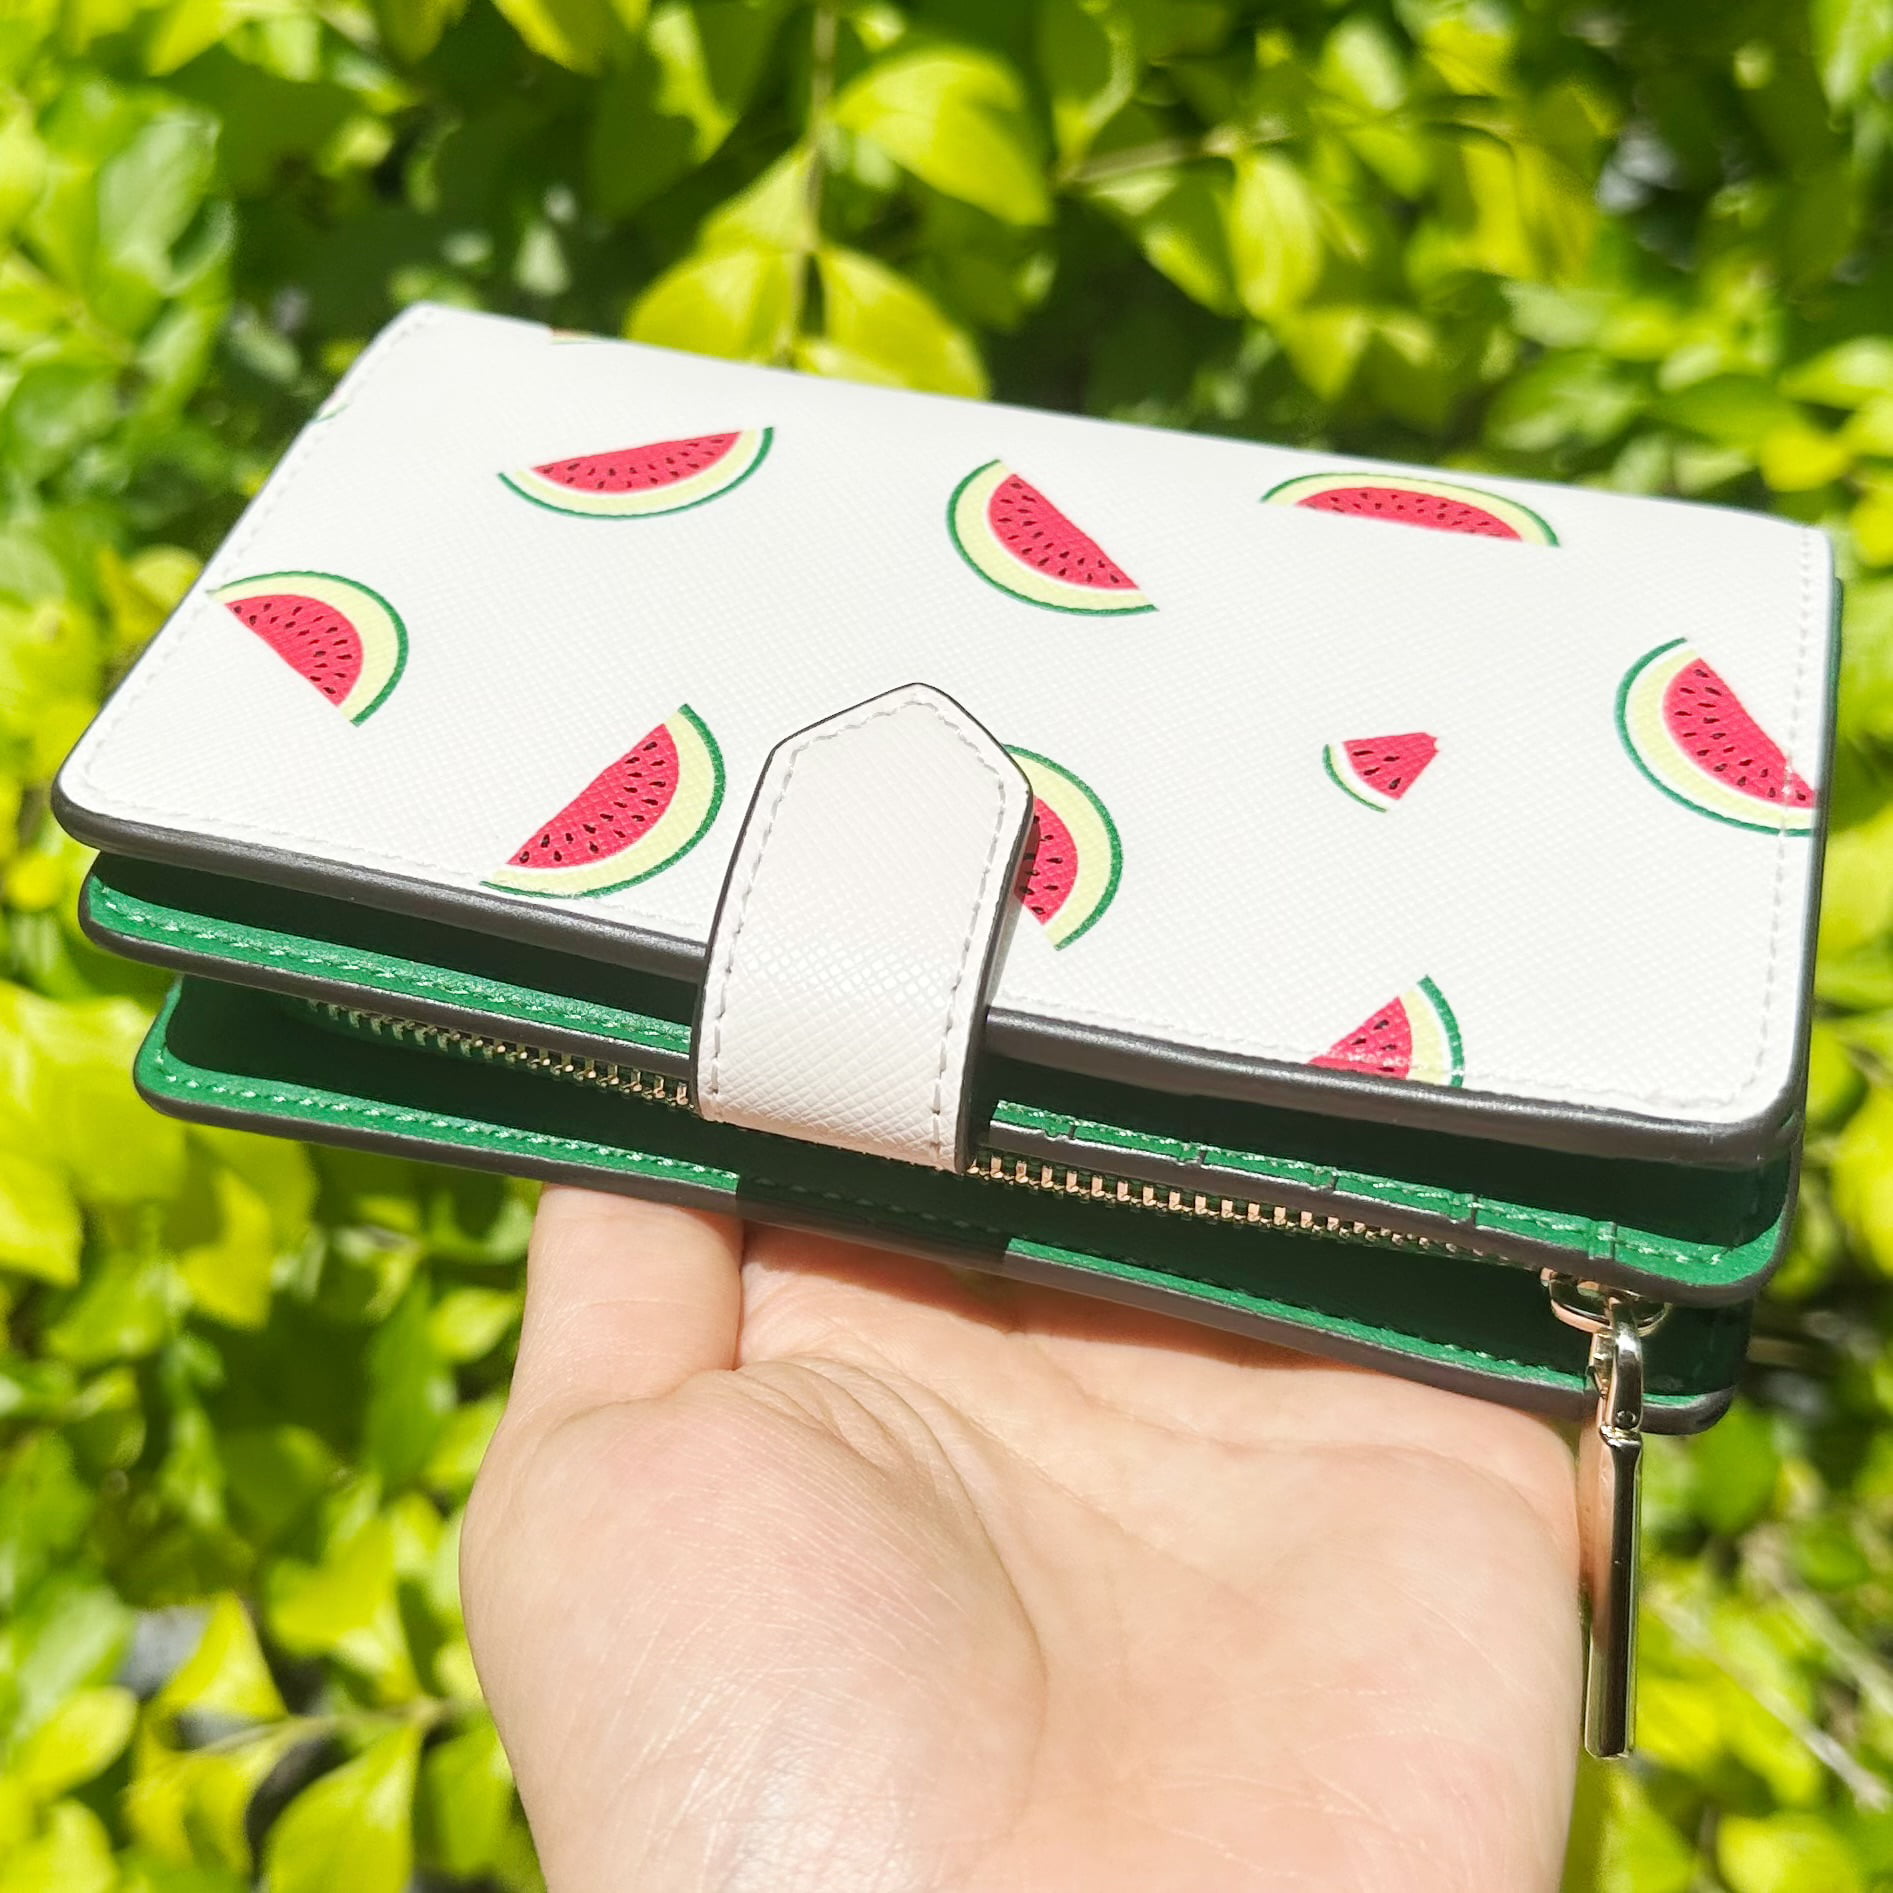 Kate Spade Staci Watermelon Party Medium Compact Bifold Wallet